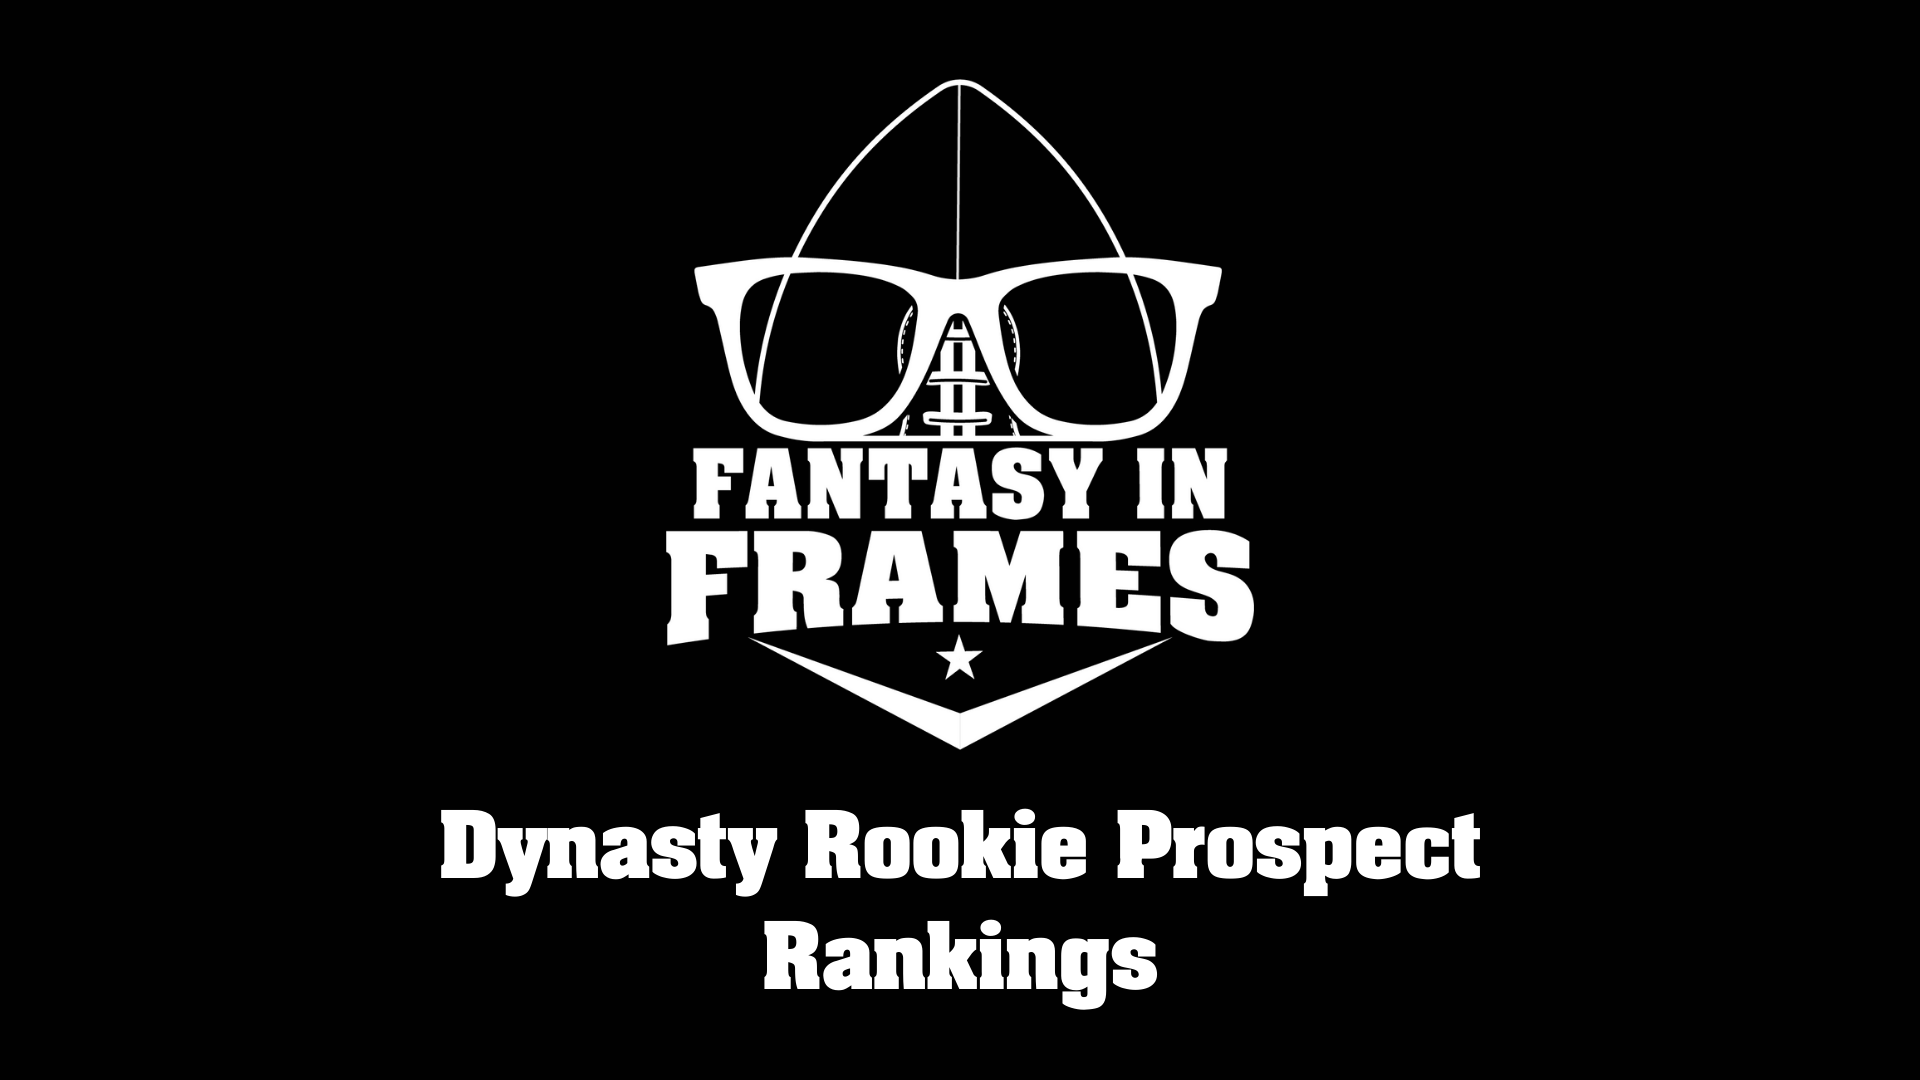 Dynasty Rookie Prospect Rankings Fantasy In Frames